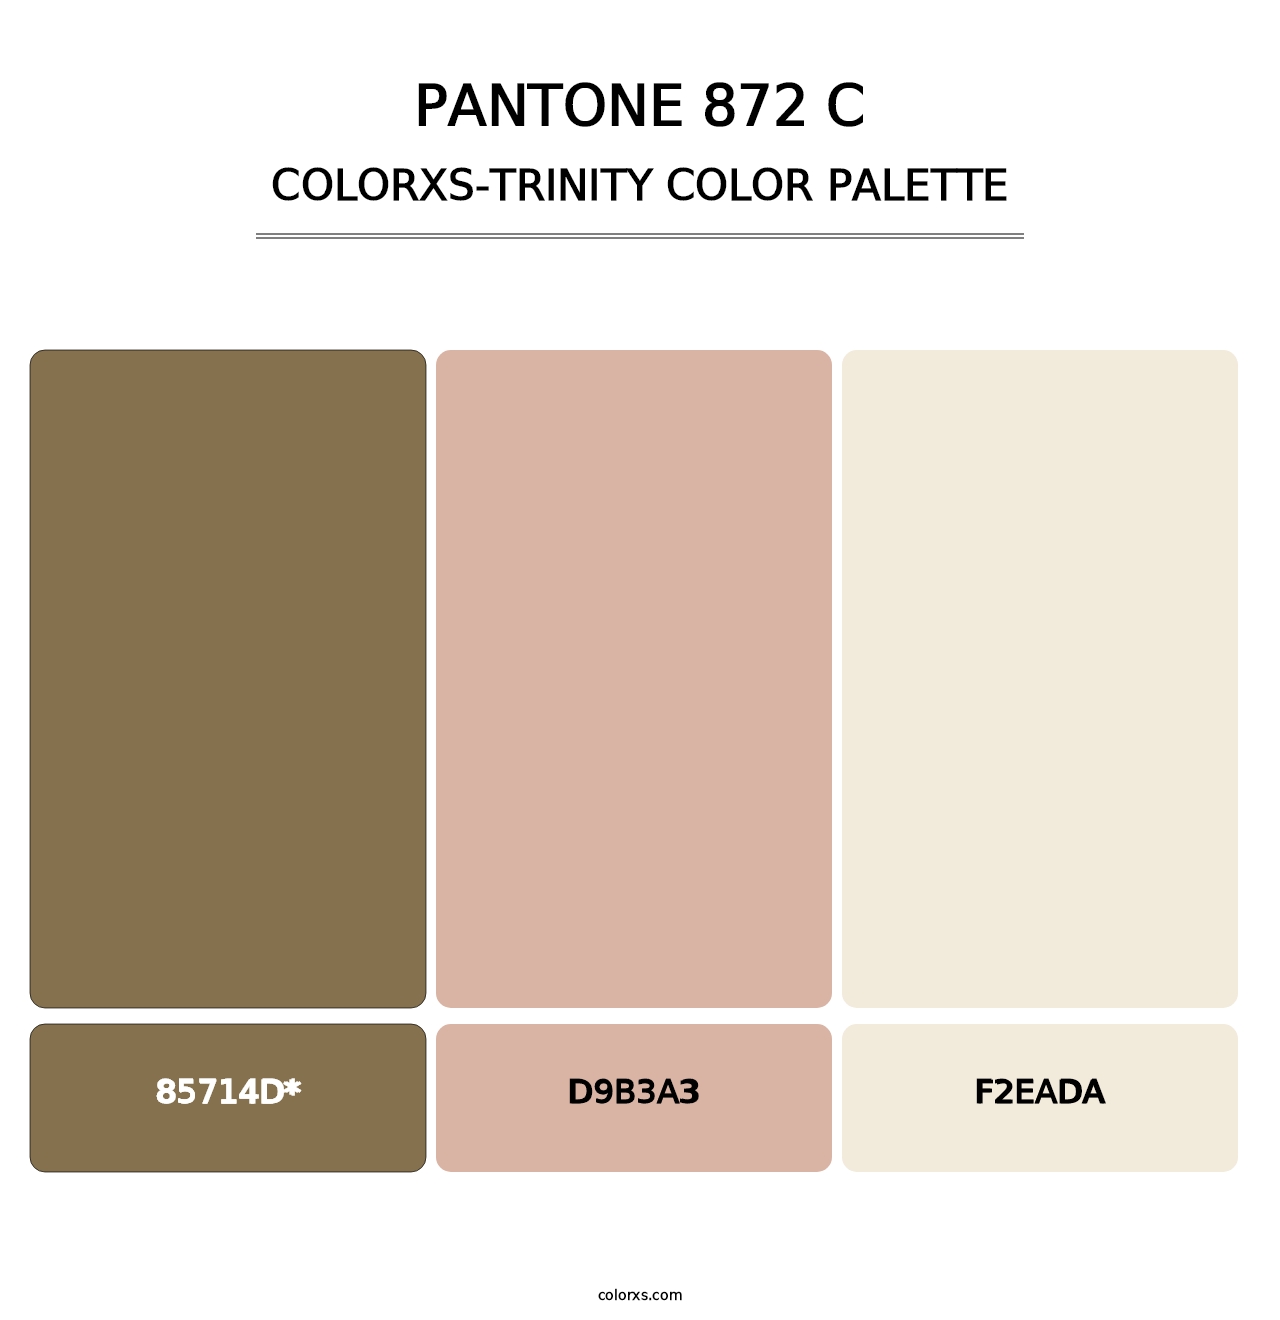 PANTONE 872 C - Colorxs Trinity Palette